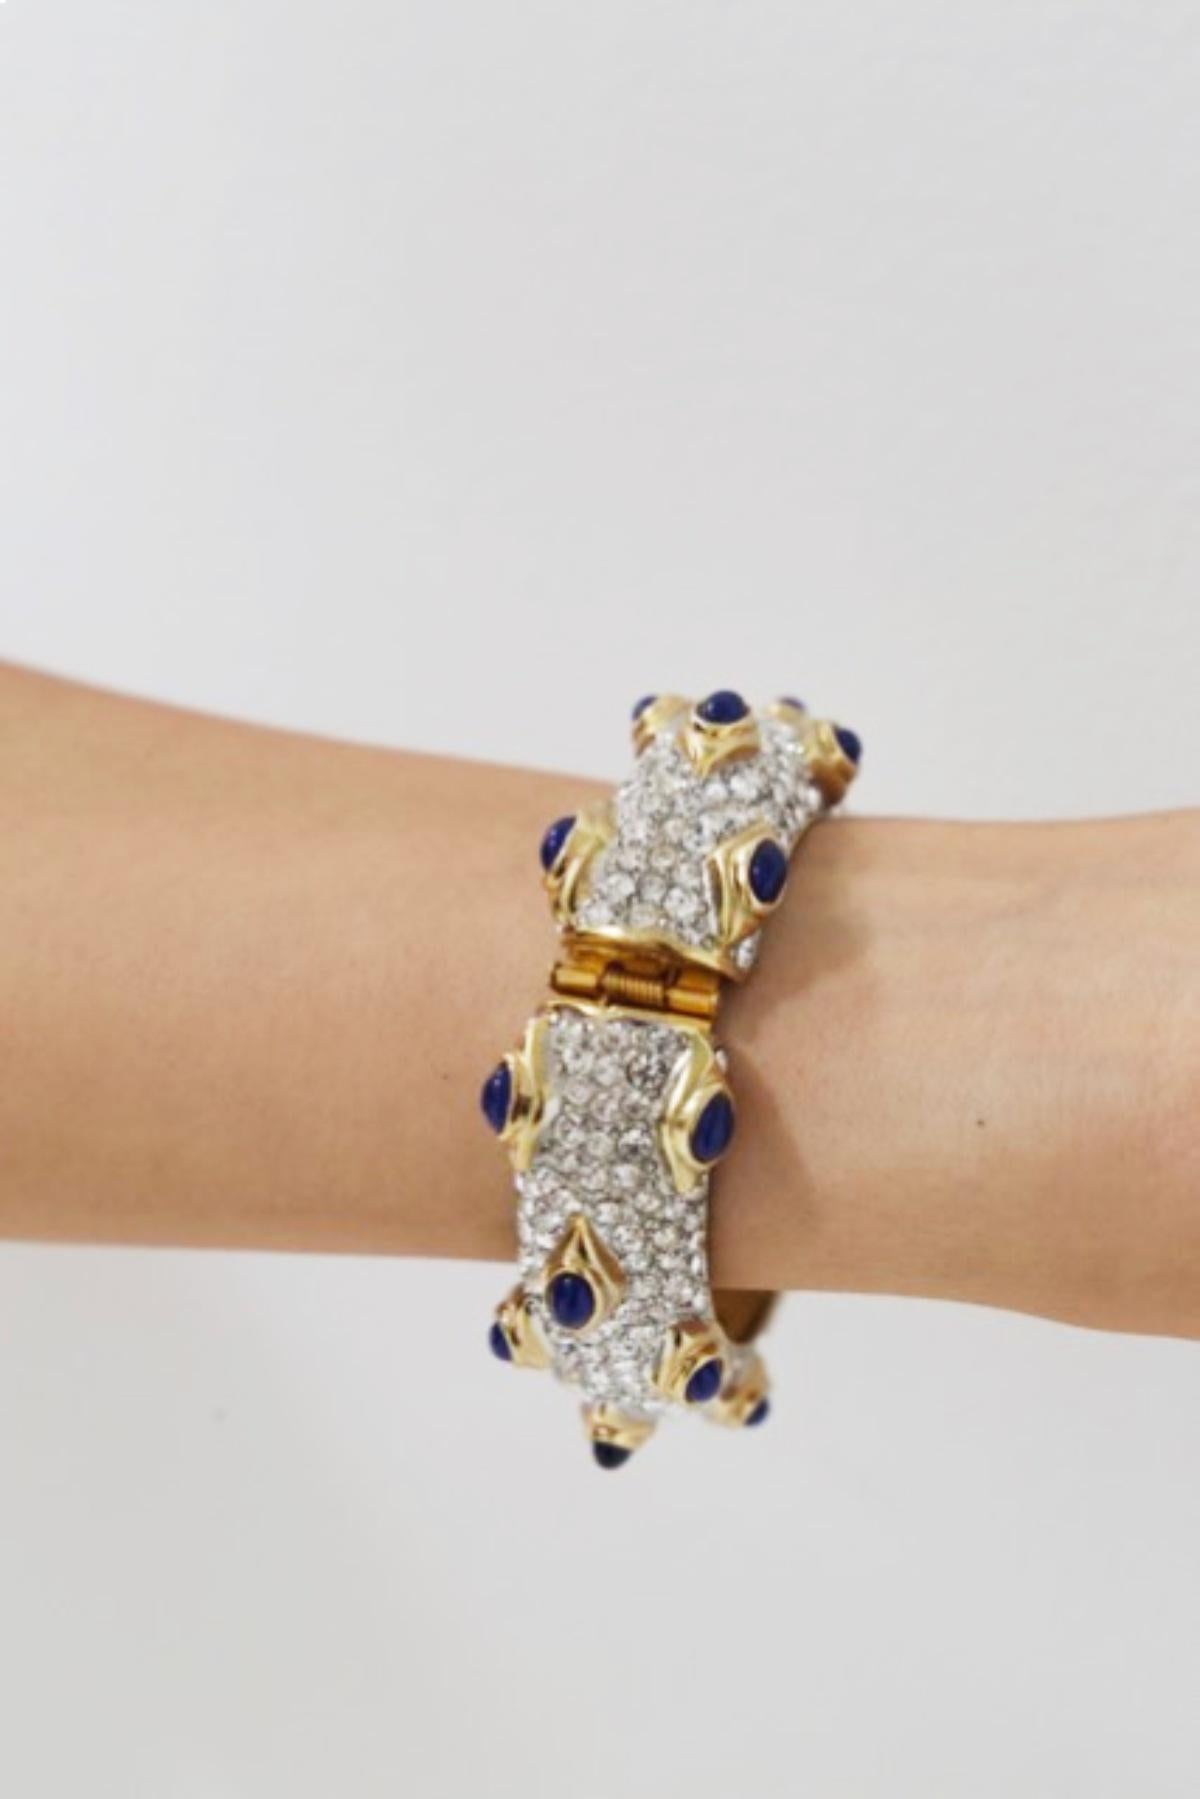 Princess Cut Kenneth Lane Gold Bracelet with Blue Stones For Sale